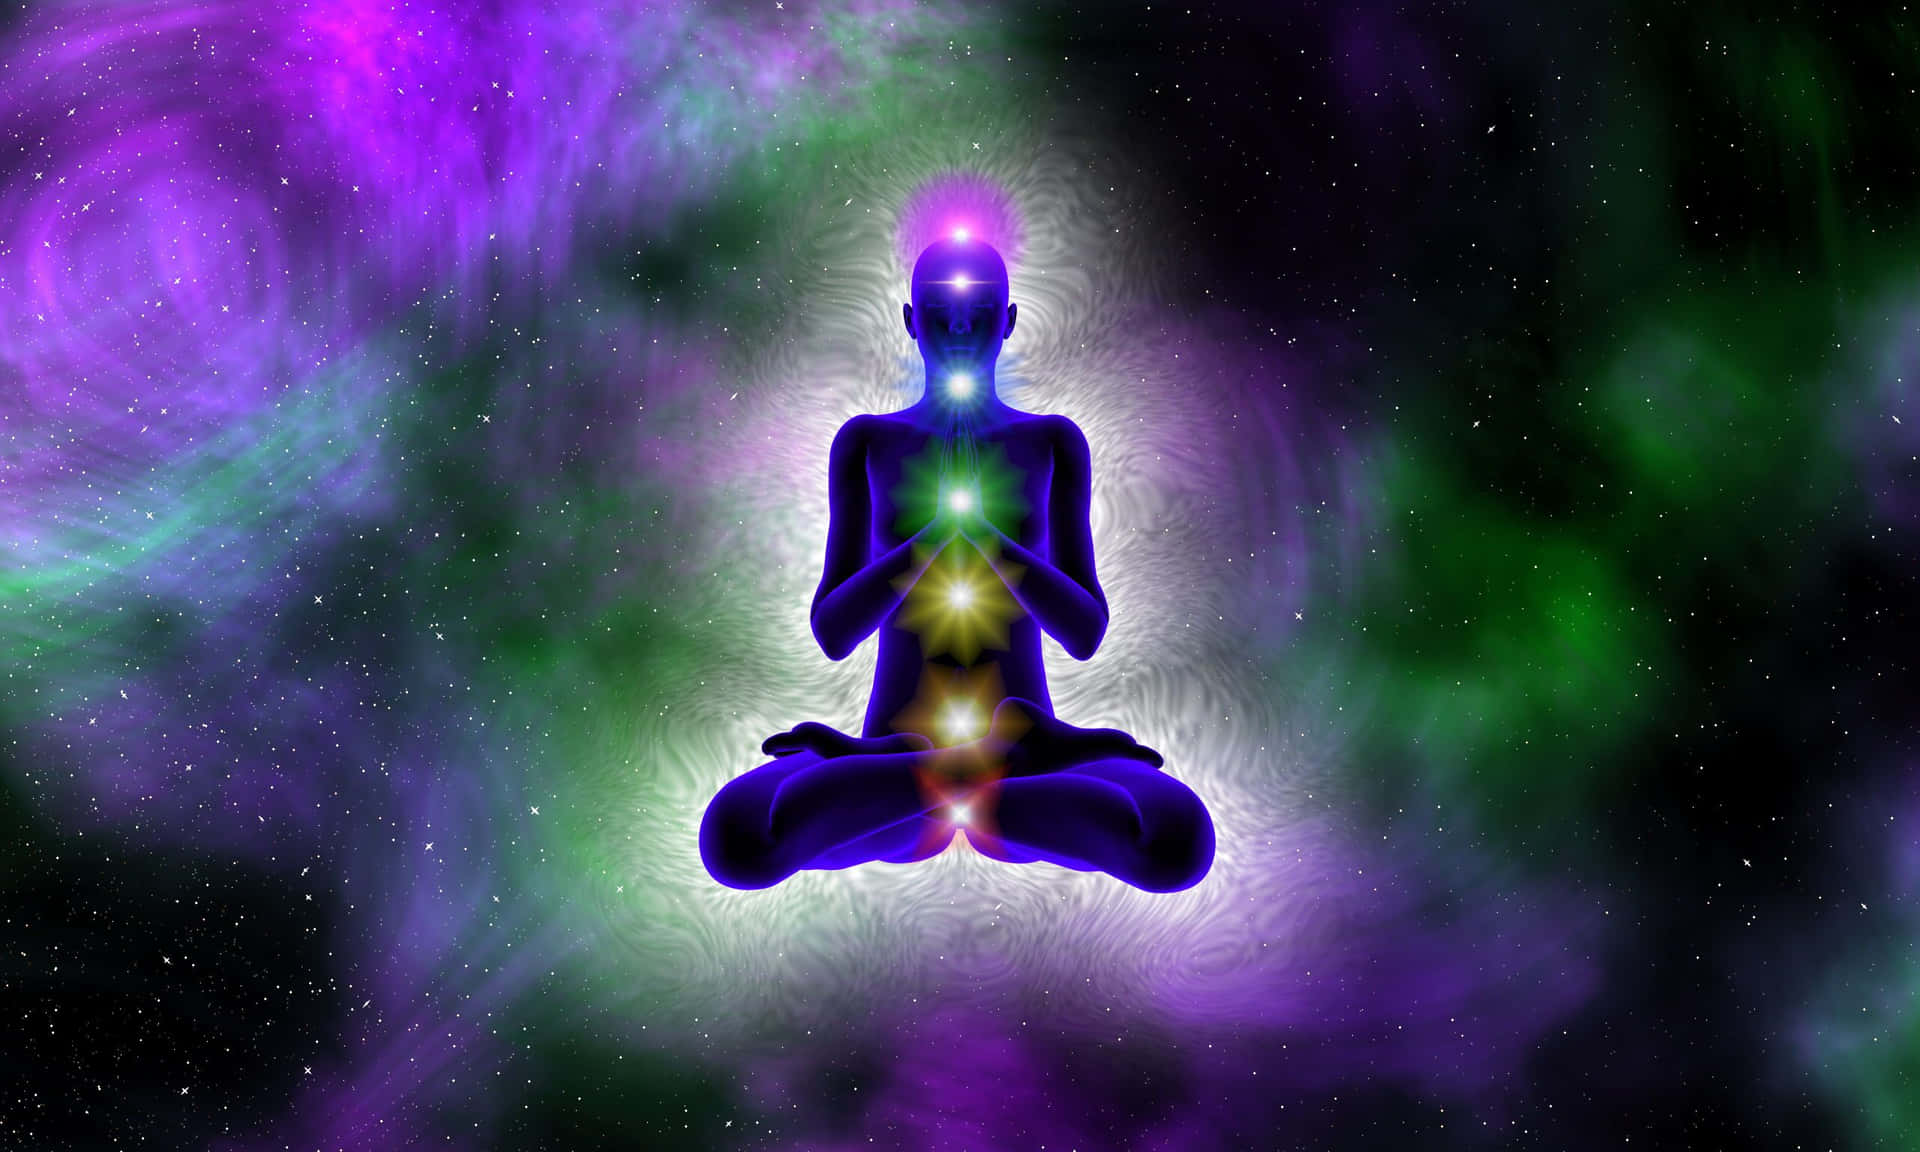 Tranquil Spiritual Meditation Environment Wallpaper